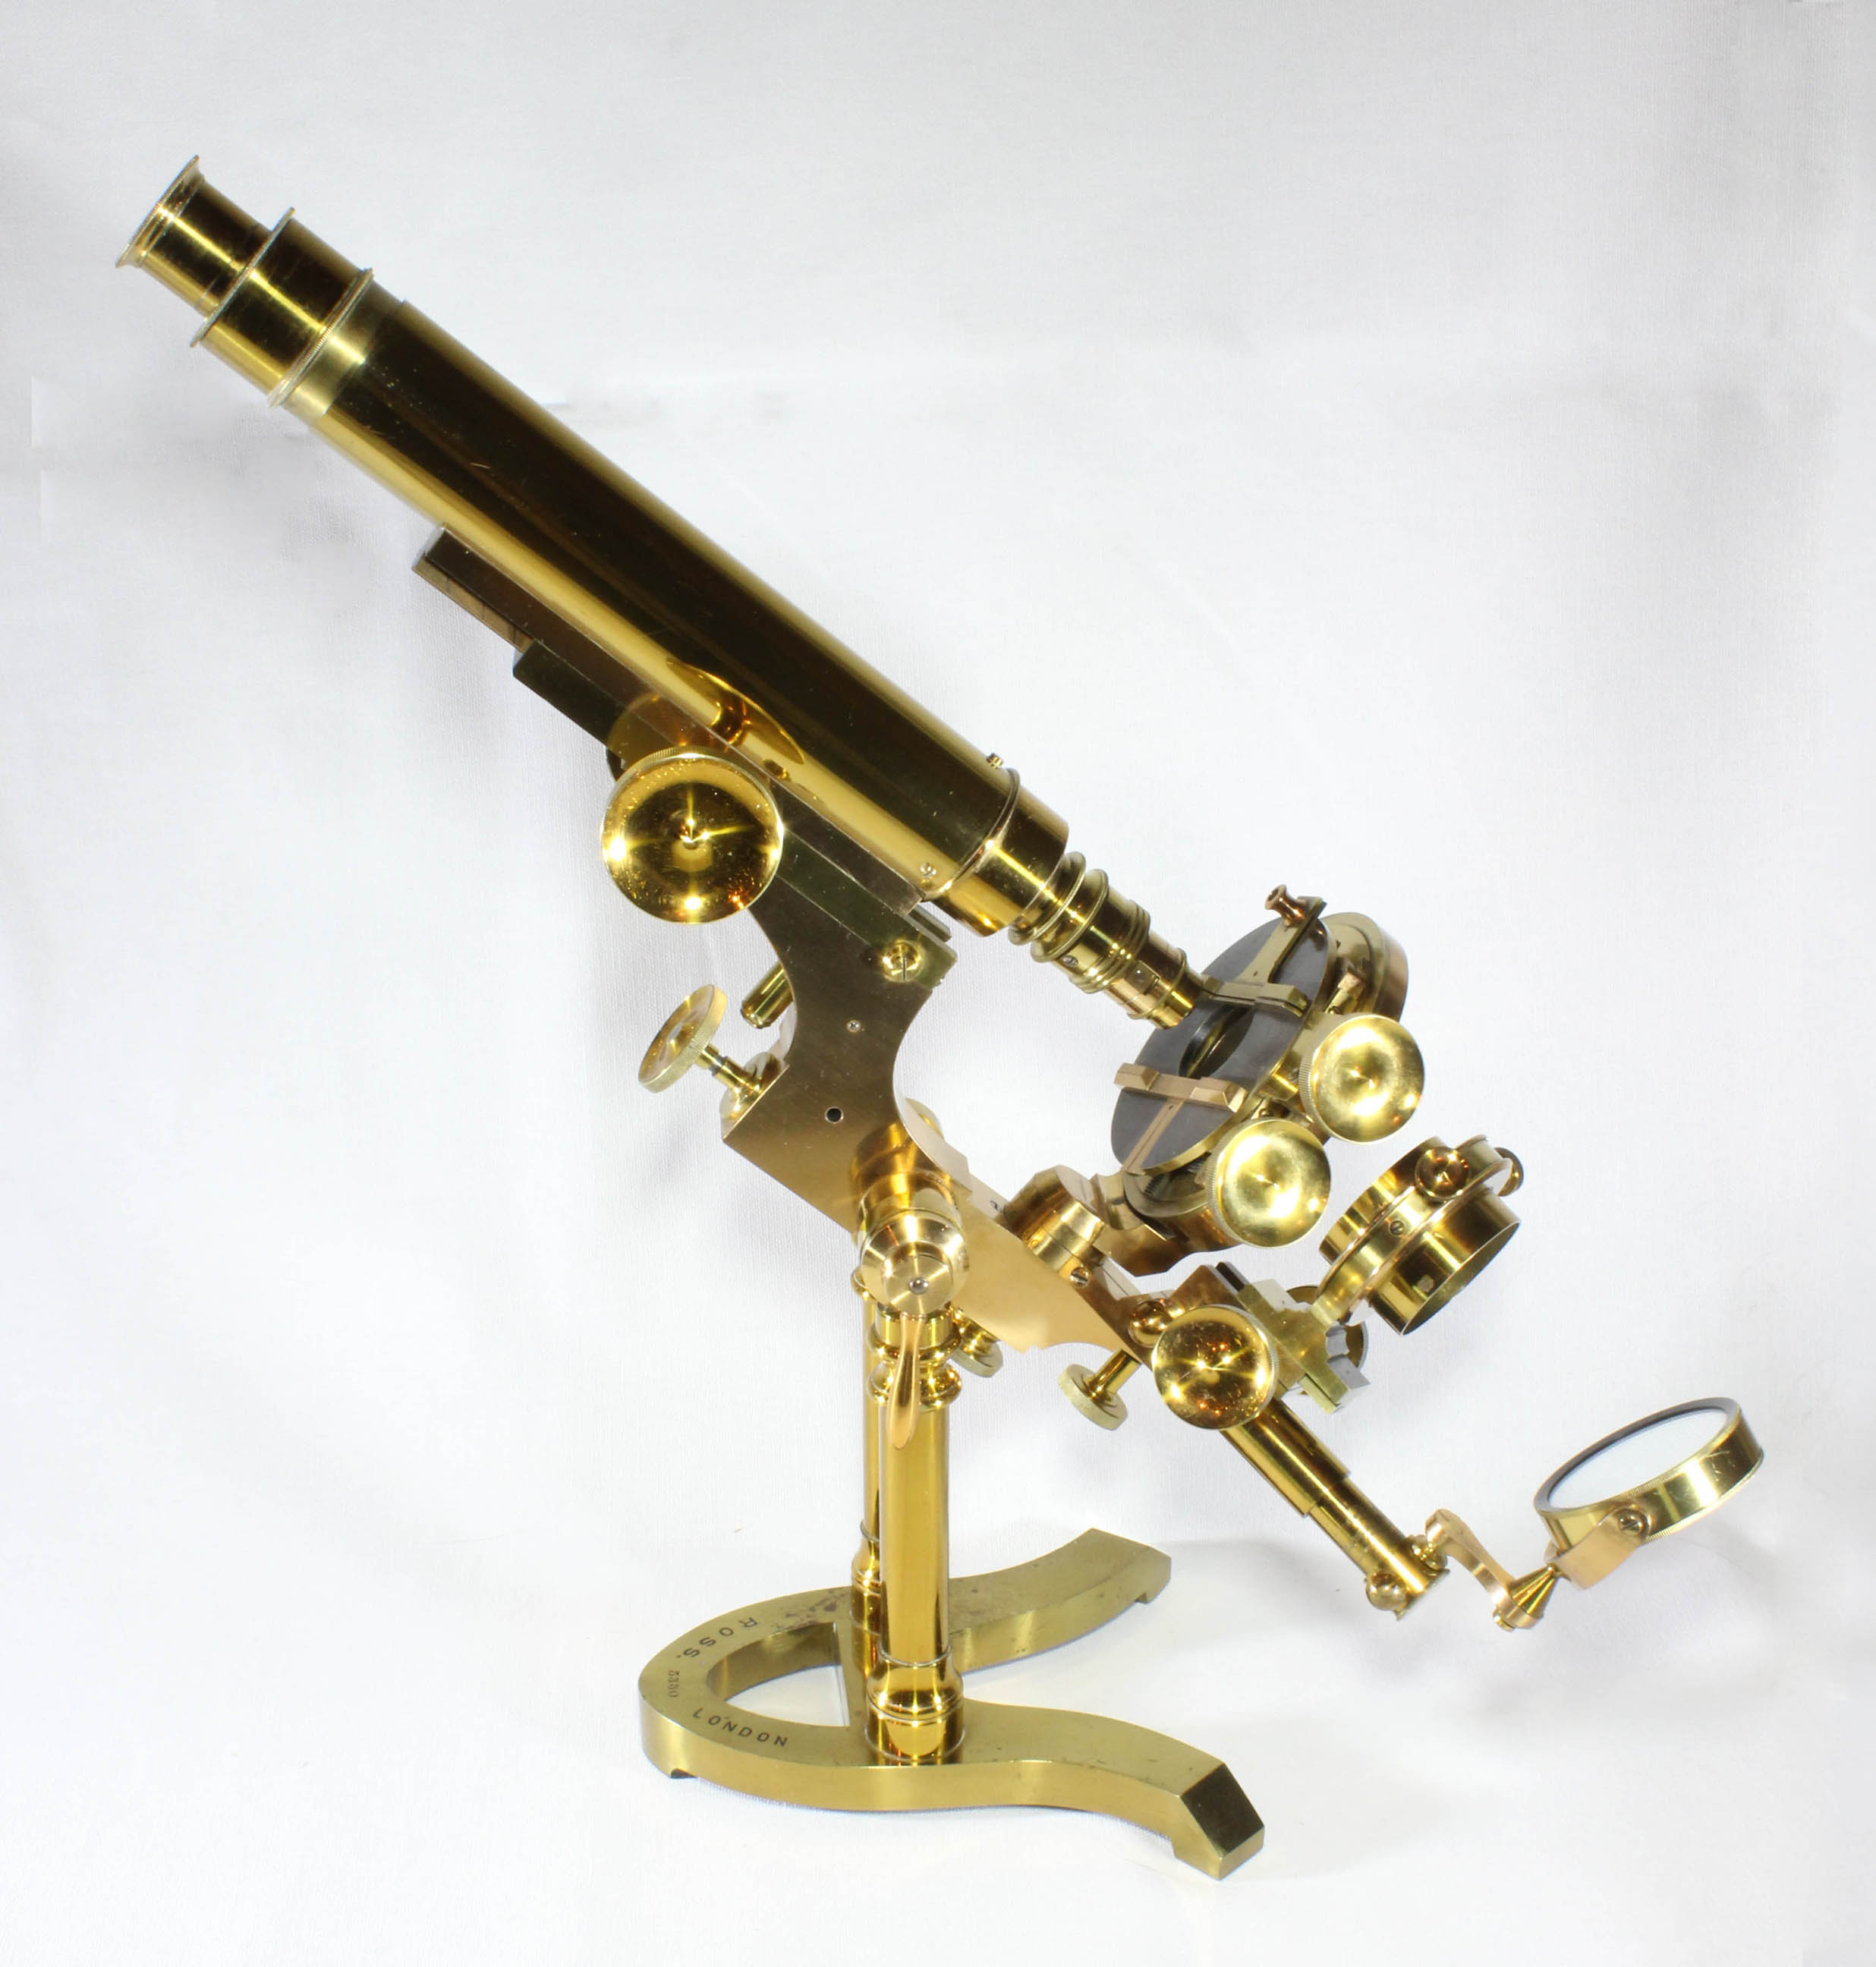 The Ross Zentmayer microscope